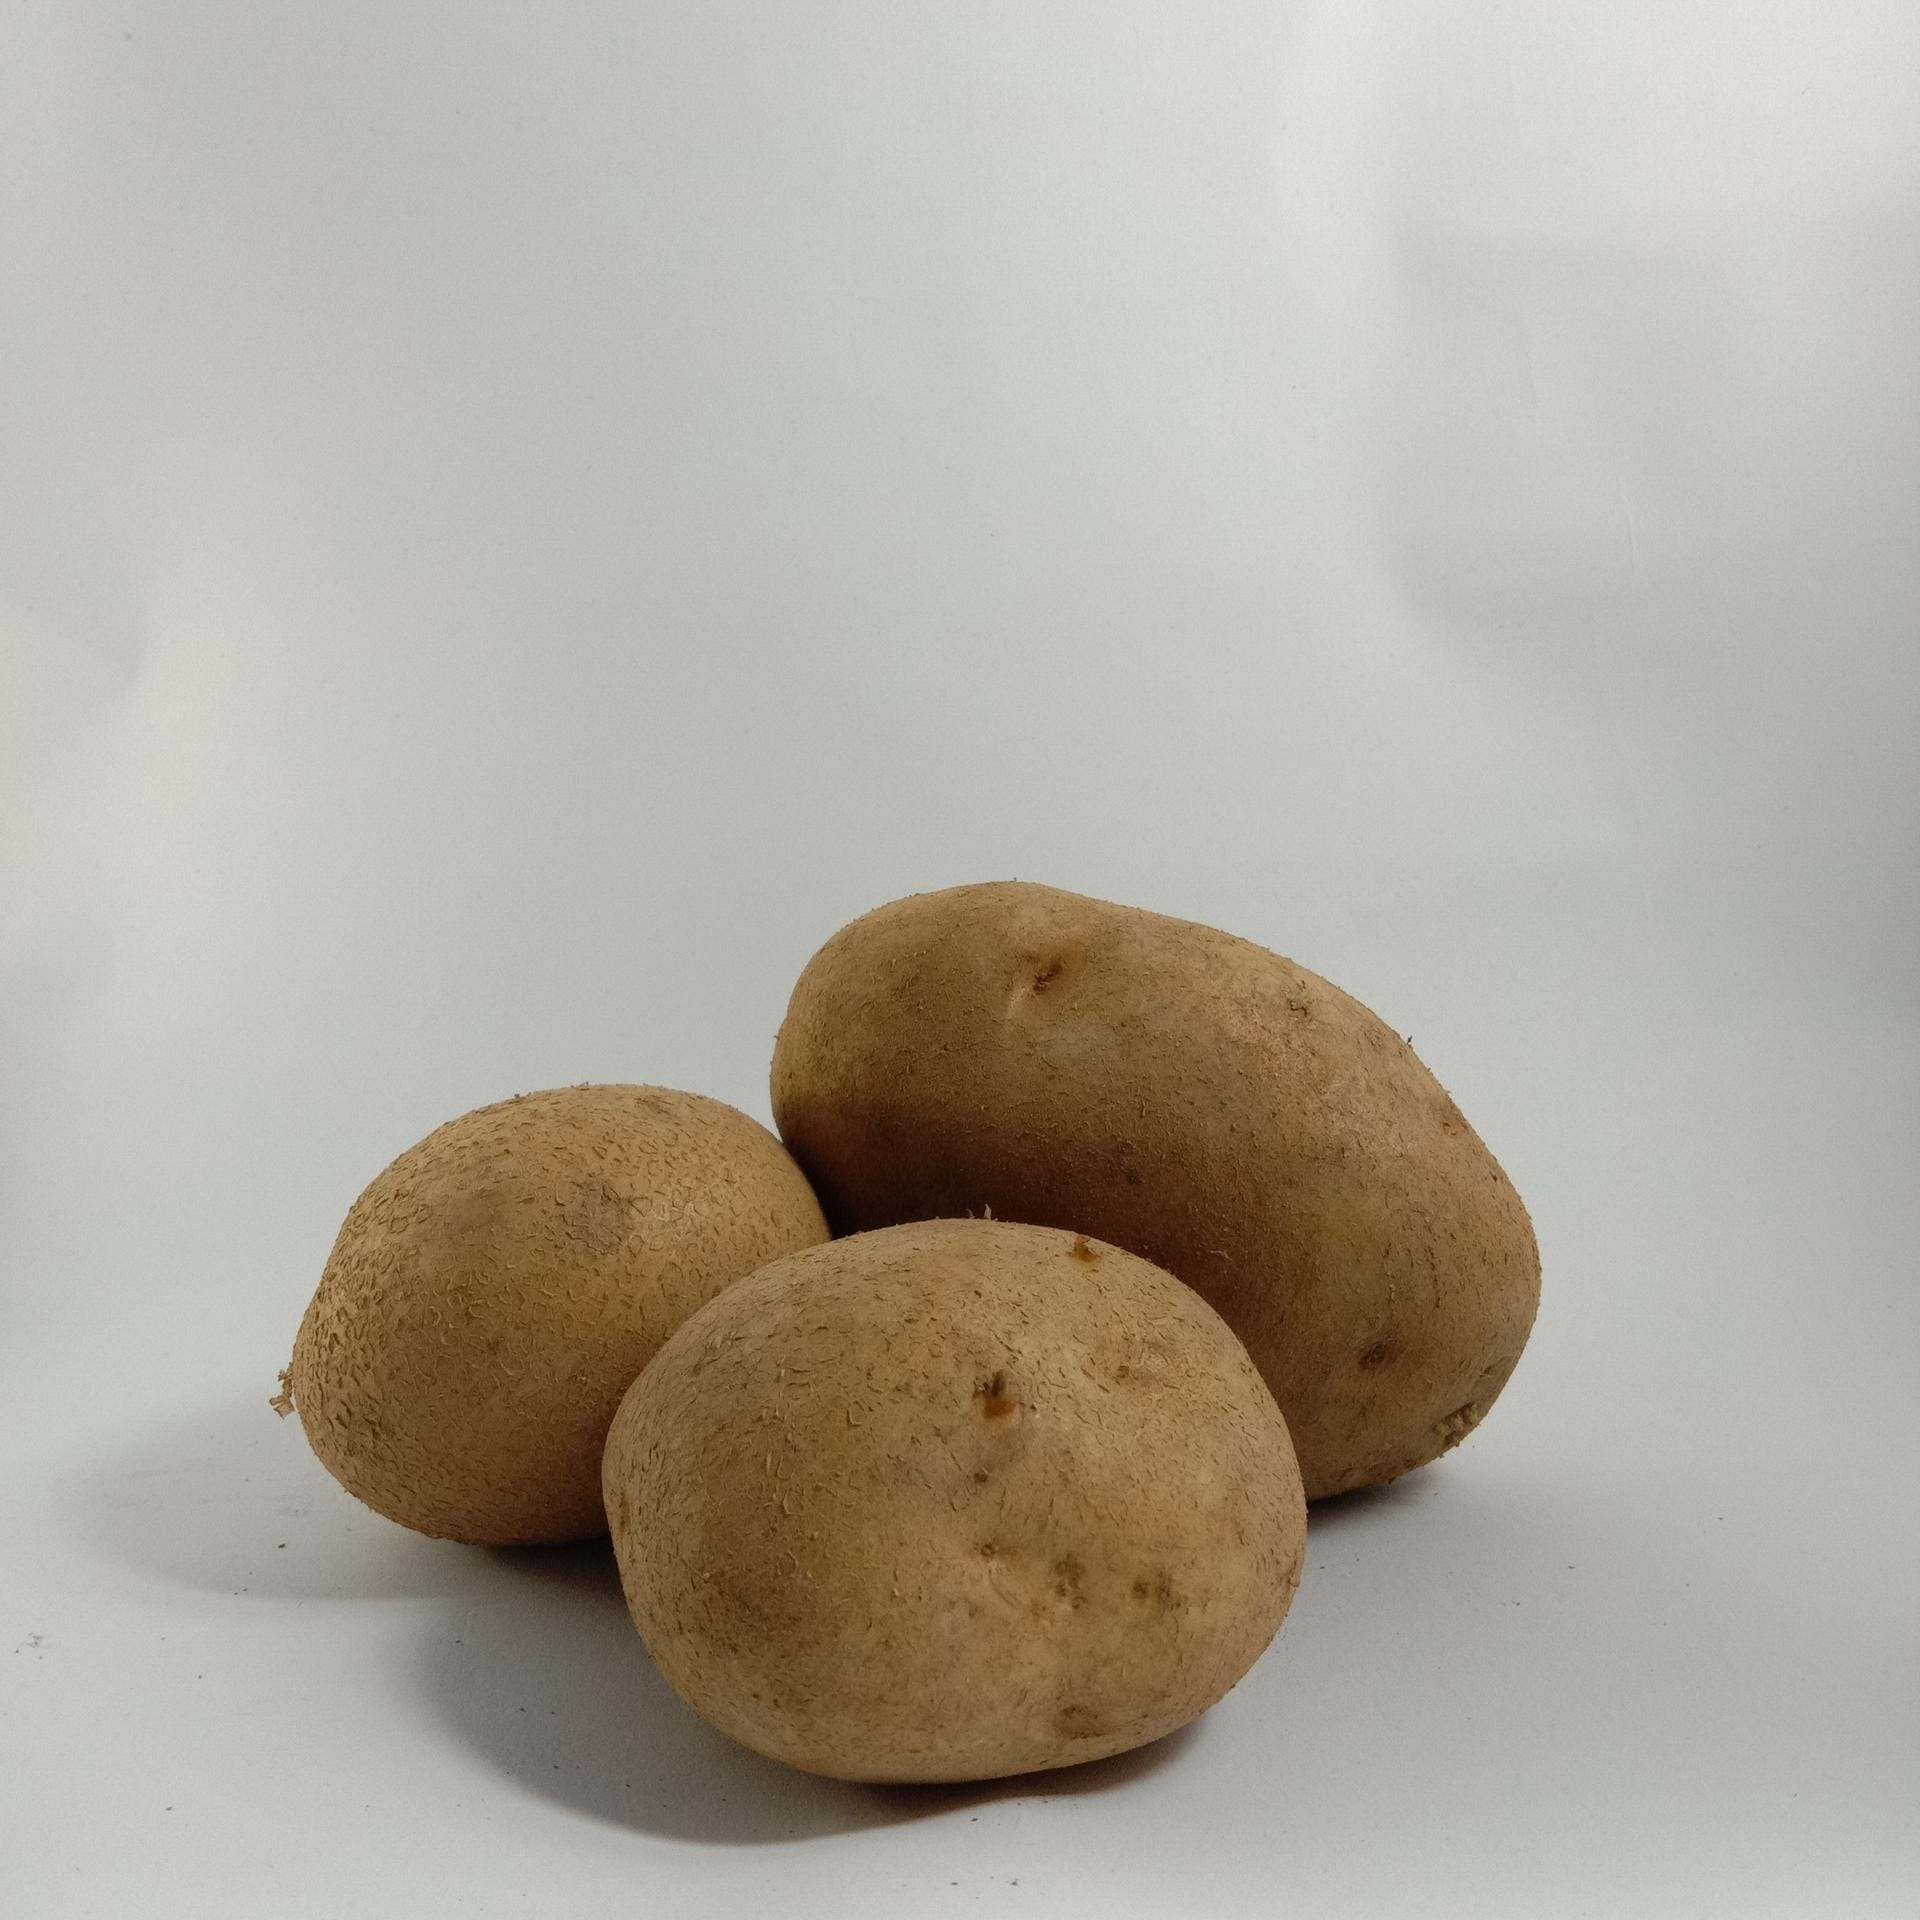 Kartoffel des Jahres 2014: "Granola"